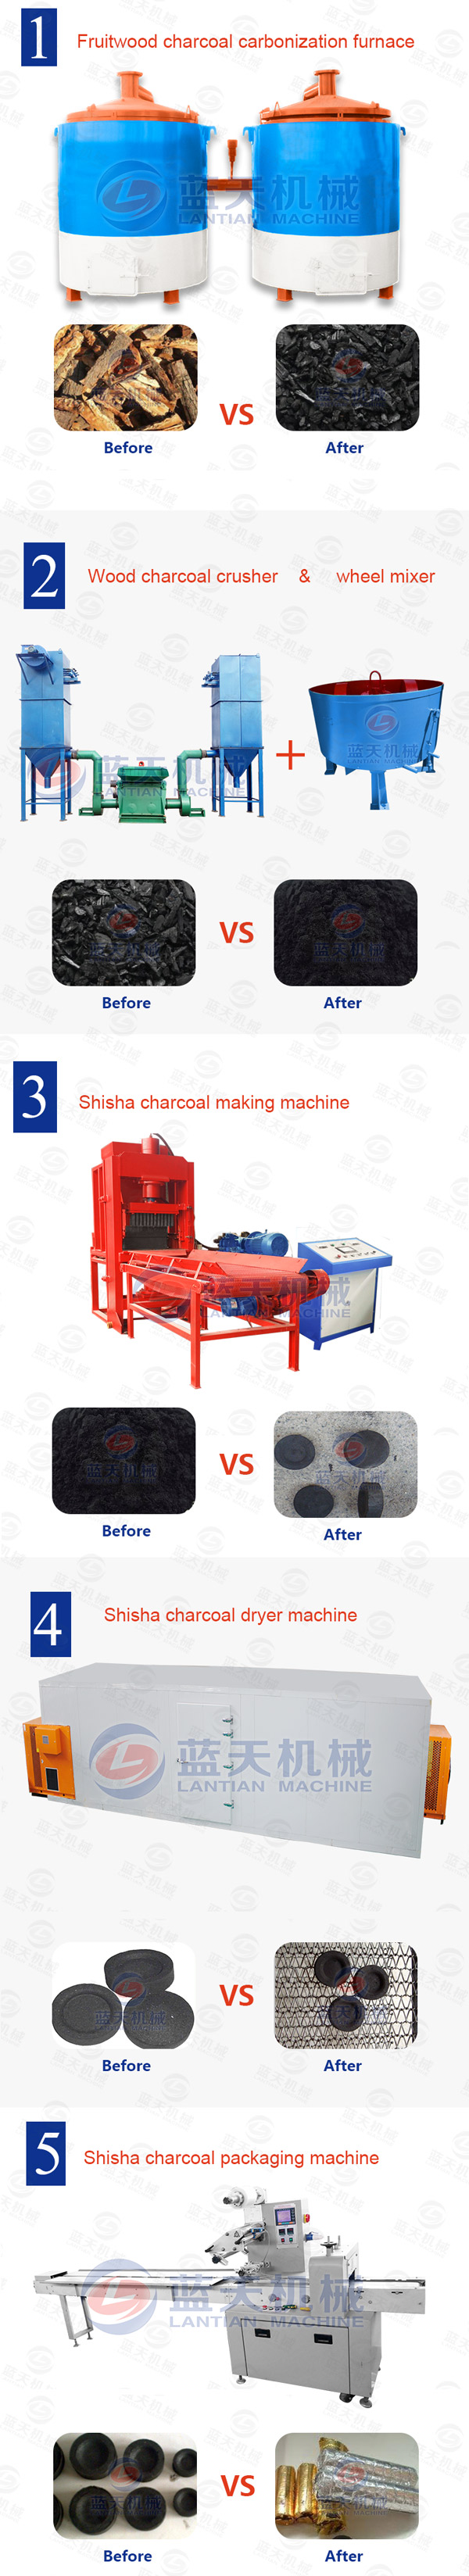 shisha charcoal briquette making machine